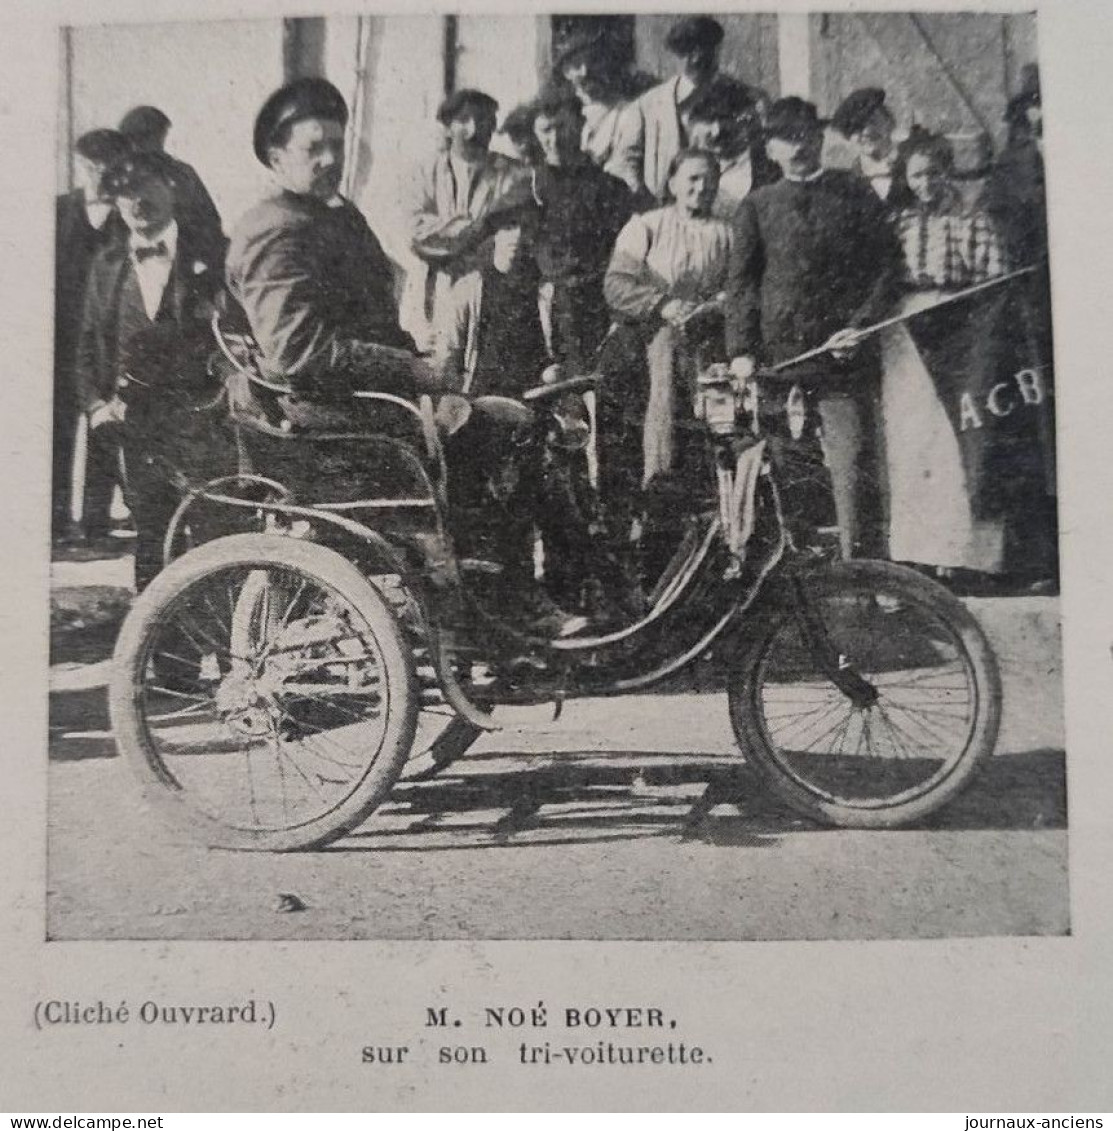 1899 COURSE AUTOMOBILES - PAU = BAYONNE = PAU - AUTOMOBILE CLUB BÉARNAIS - LA VIE AU GRAND AIR - Magazines - Before 1900